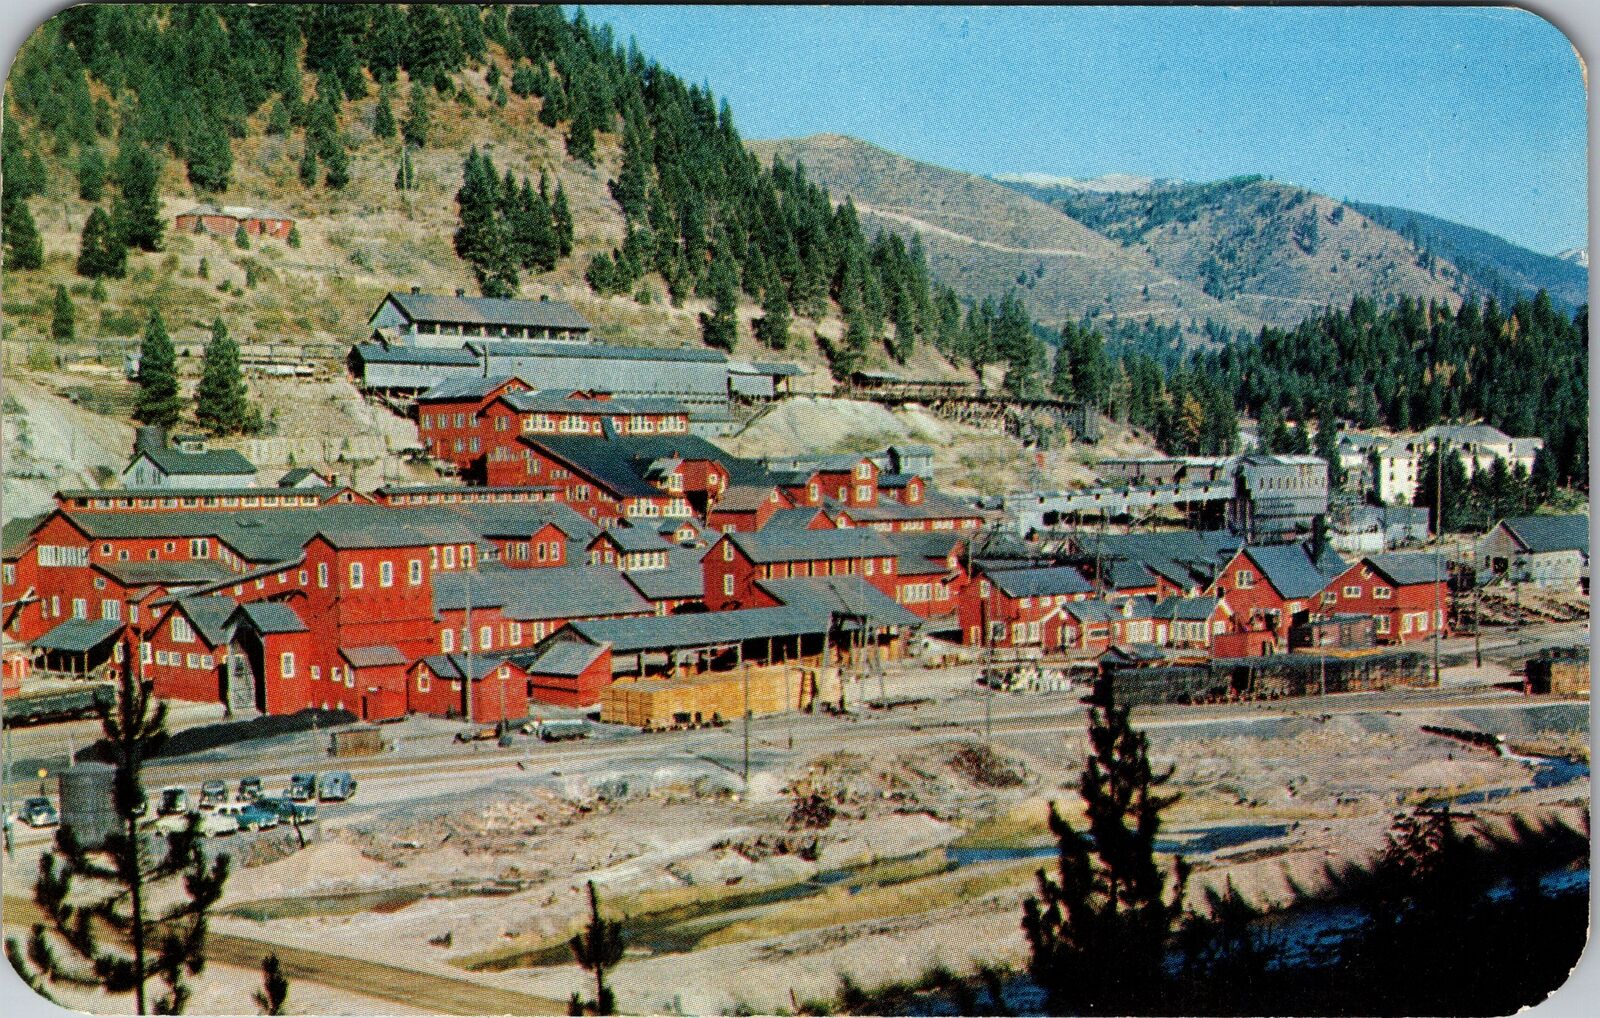 Mullan ID-Idaho, The Morning Mine, Scenic View, Vintage Postcard